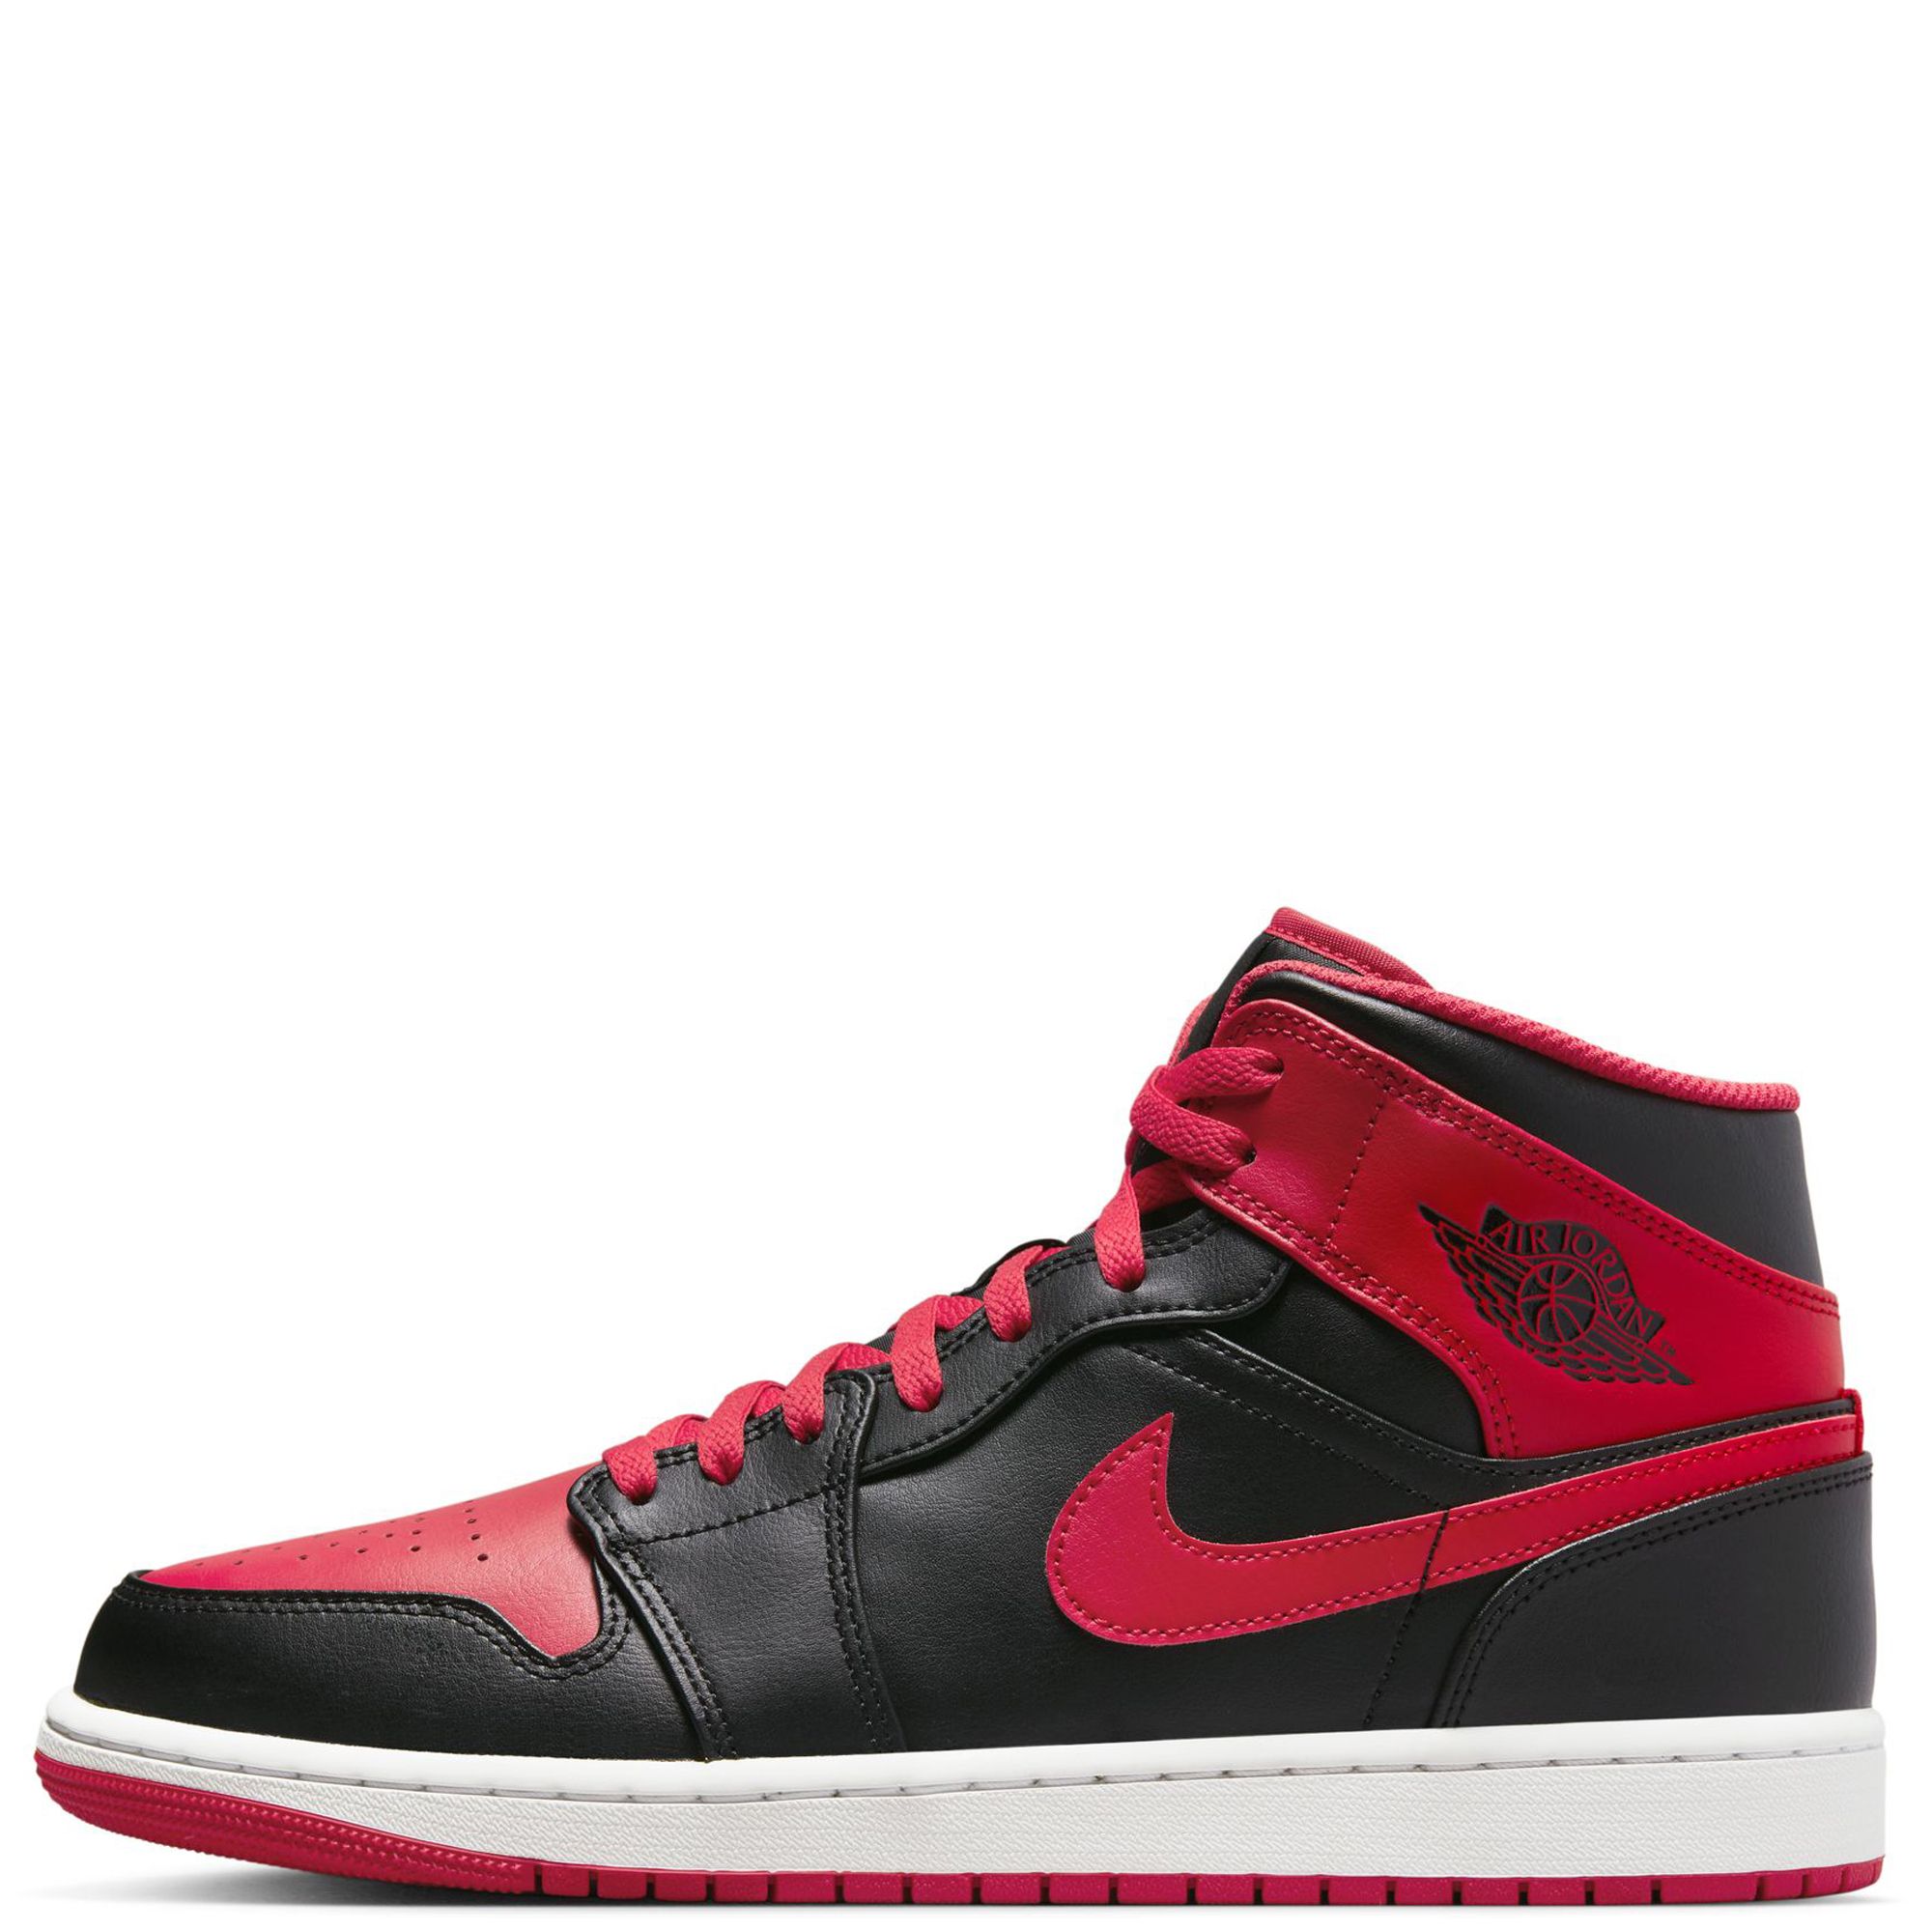  Nike Men's Air Jordan 1 Mid Sneaker, White/Black-red, 9